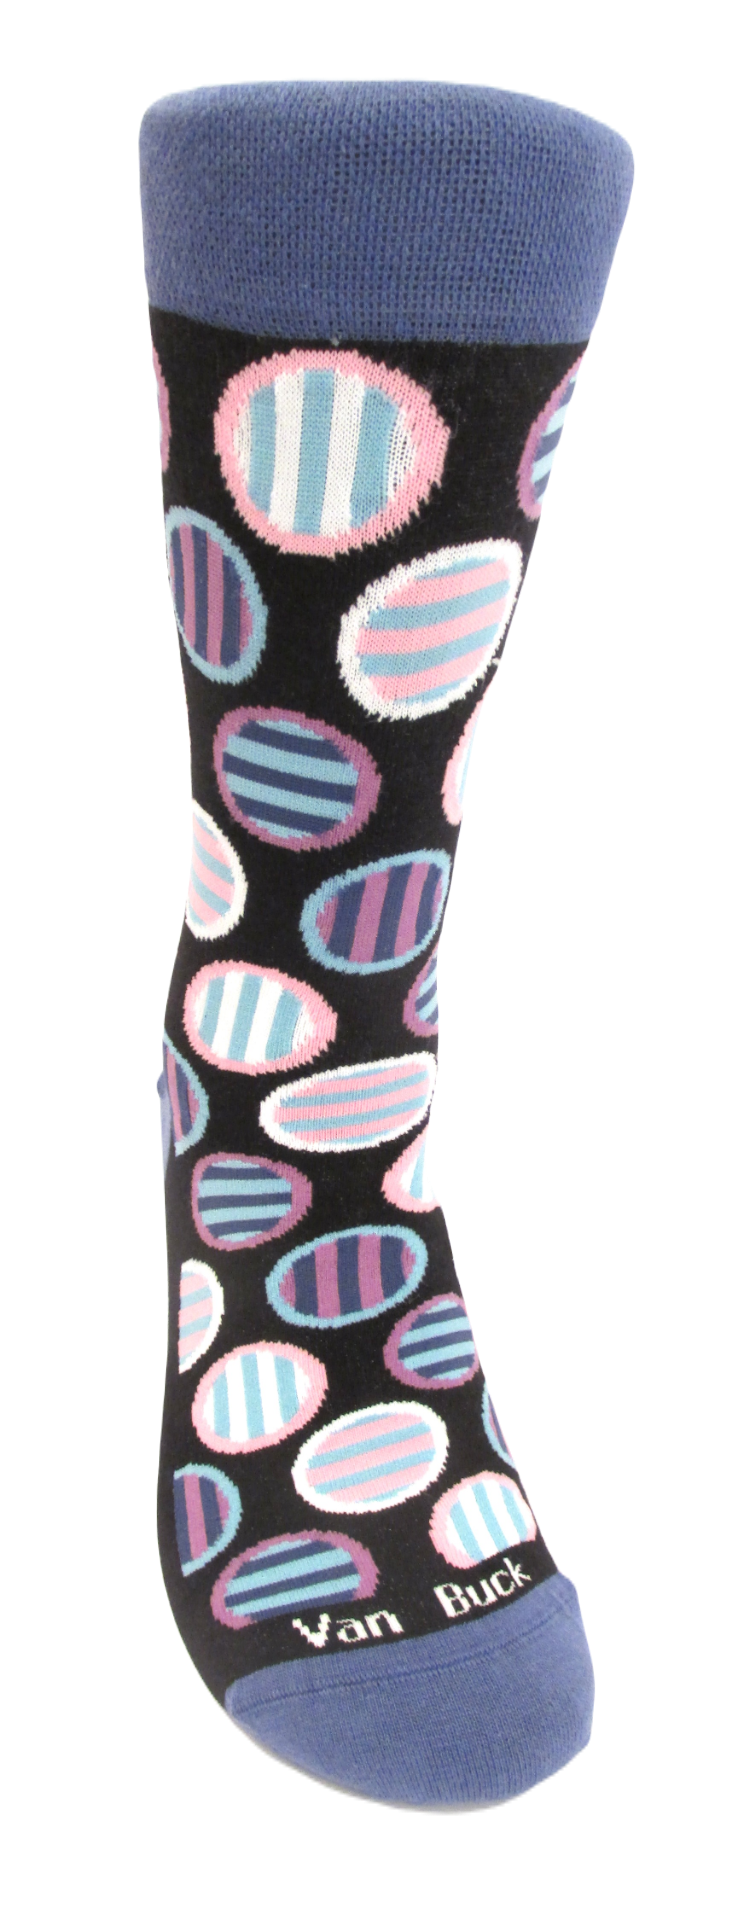 van buck limited edition blue circle stripe socks